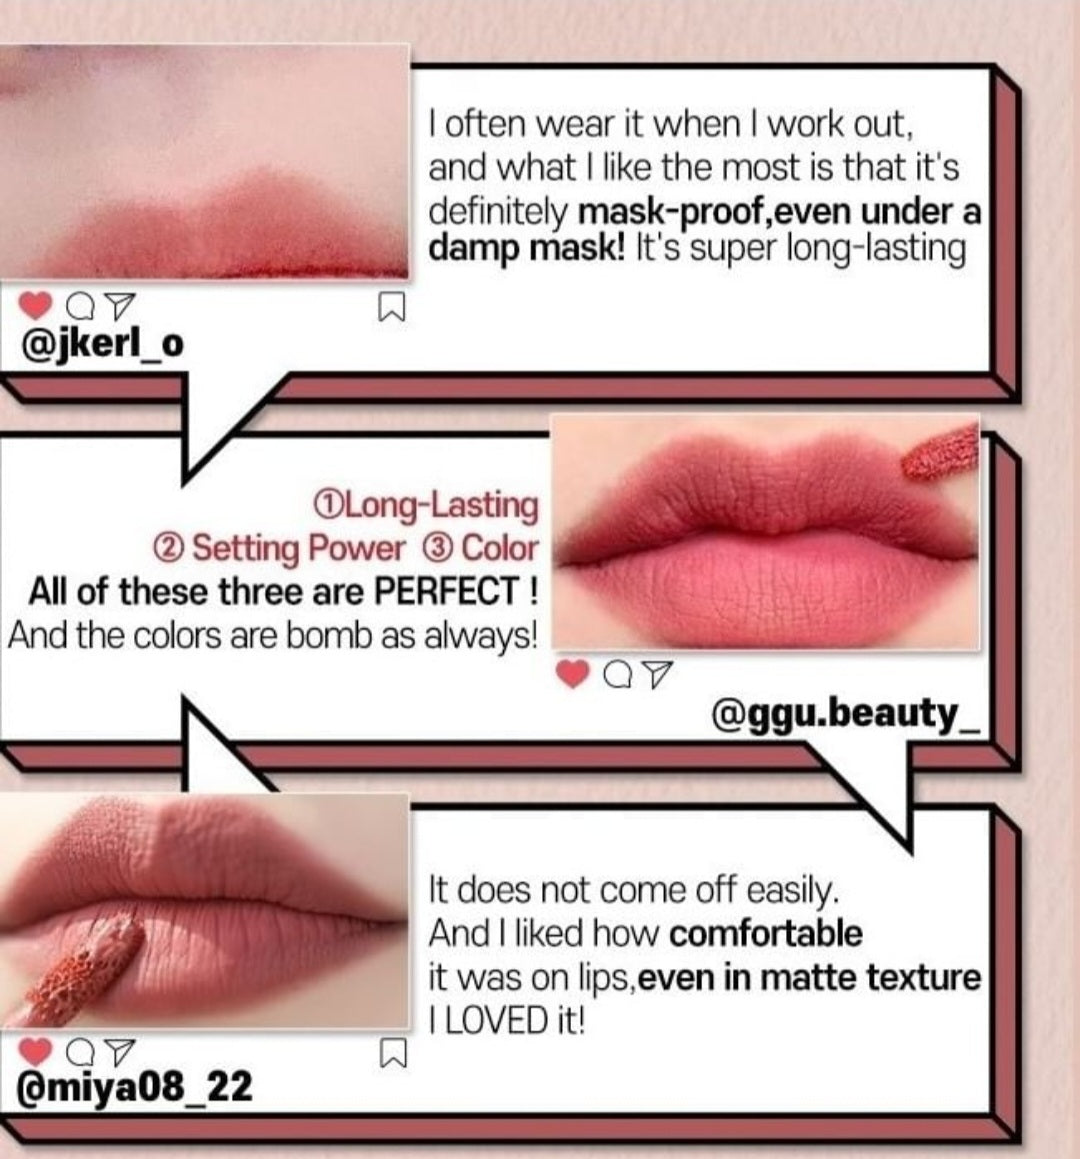 Etude fixing matt lip Tint🍬🍓🍒🍭
تنت الانوثة المخملي المات ضد المي🍒🍬🍭